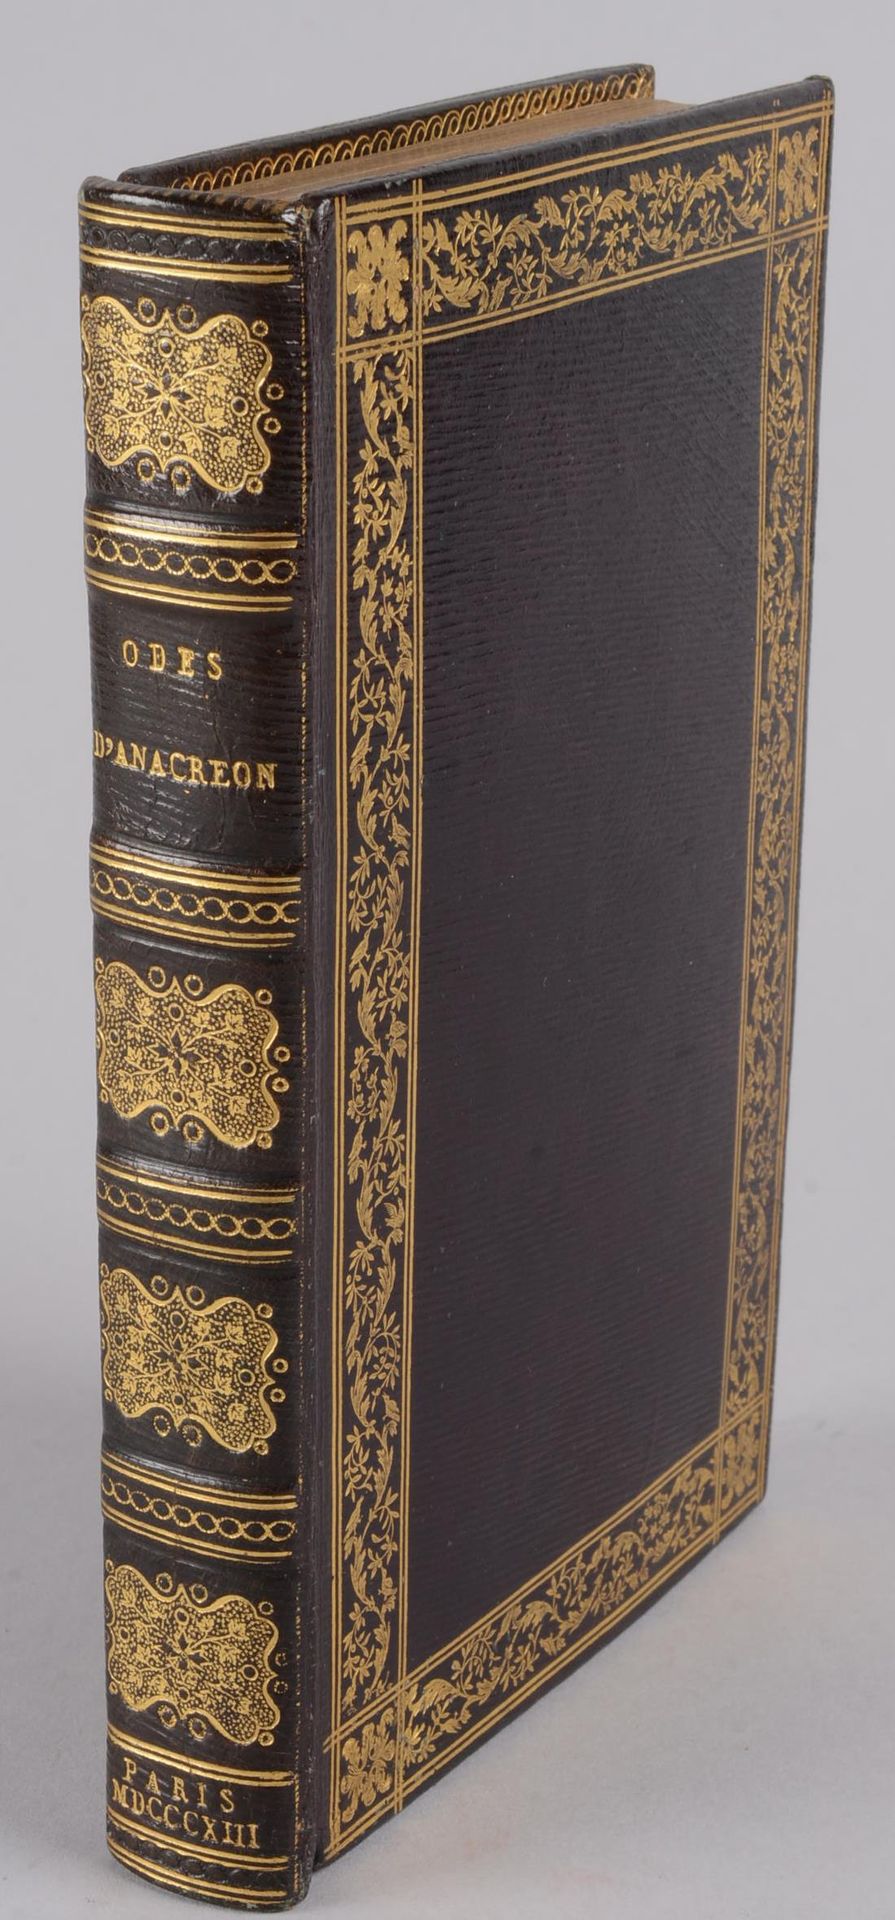 ANACREON ANACREON



 Odes d'Anacréon



 Paris, chez H. Nicolle, 1813



 Petit&hellip;